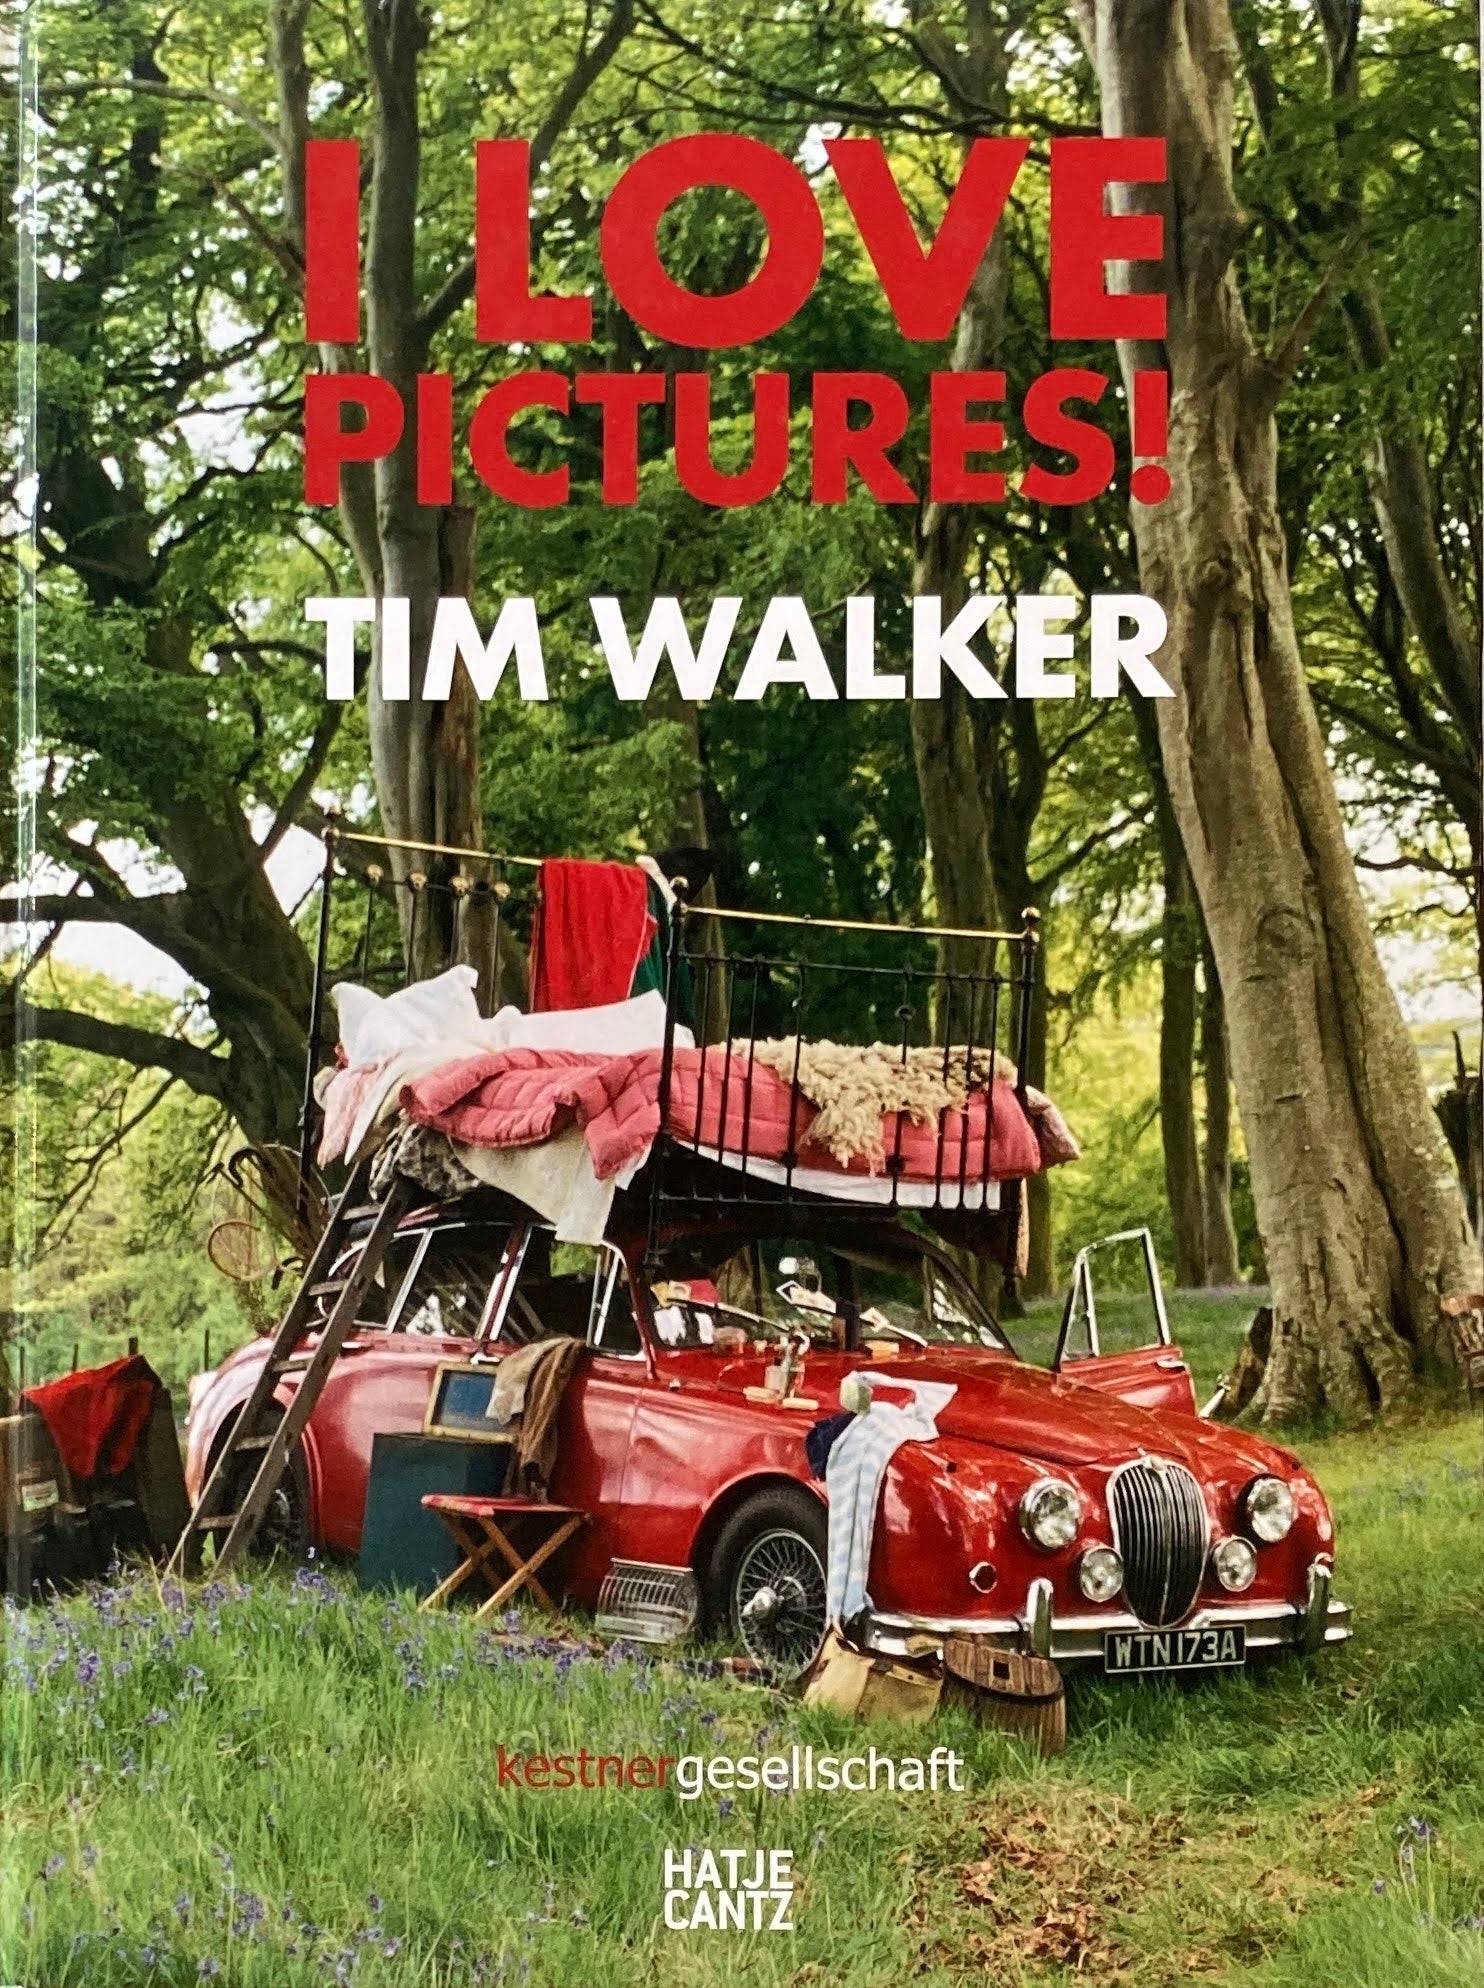 TIM WALKER PICTURES ティム・ウォーカー 写真集